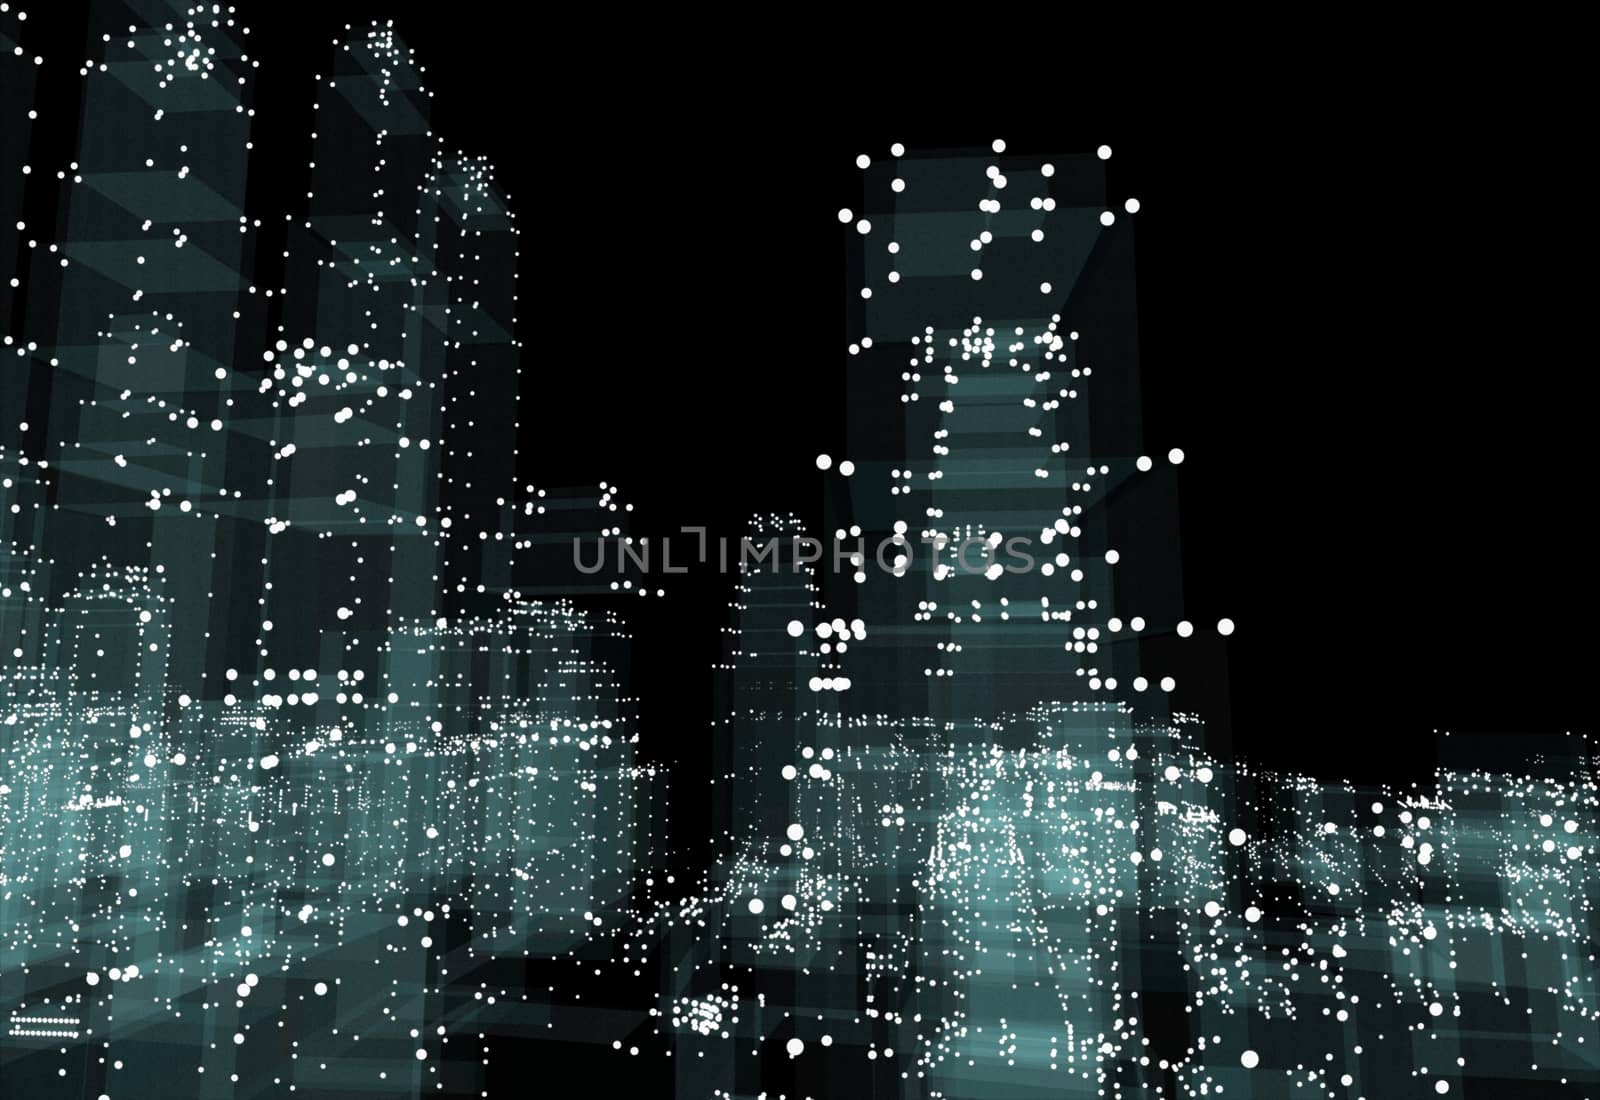 Cityscape futuristic 3d city neon light. 3d illustration. Black background